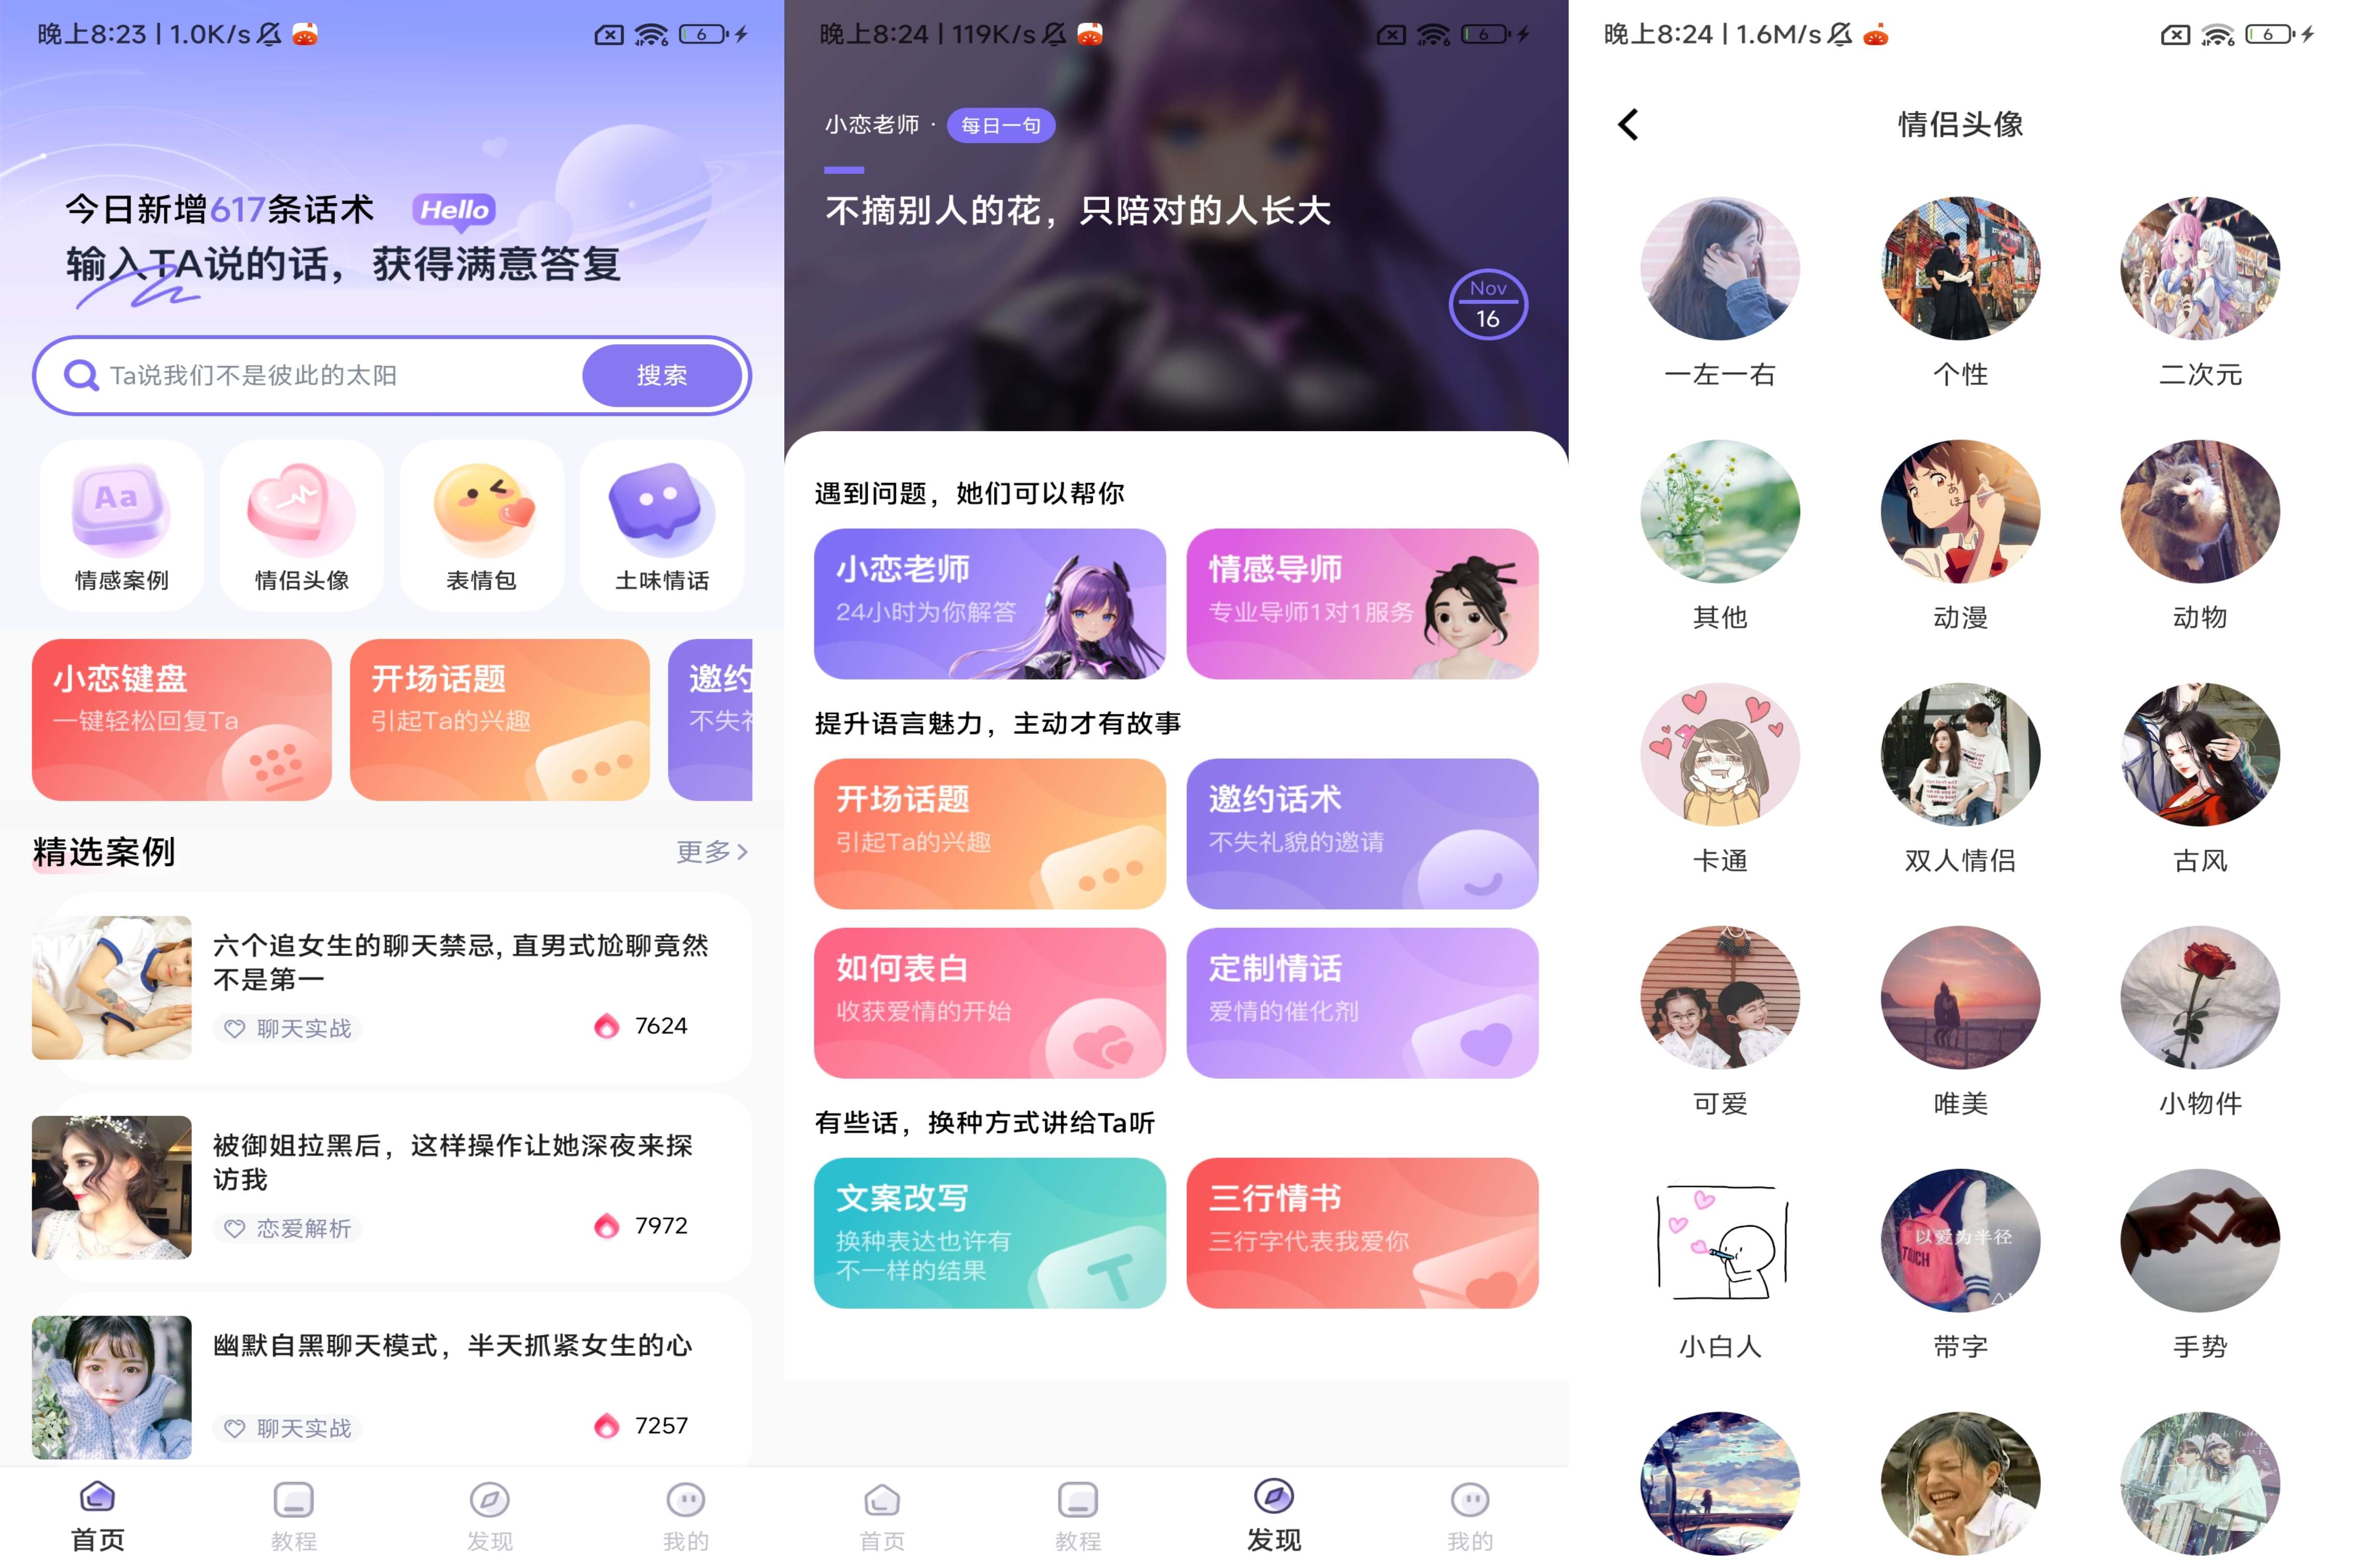 Android 恋小语v1.7.1(手机号登陆解锁VIP)-旧人软件阁